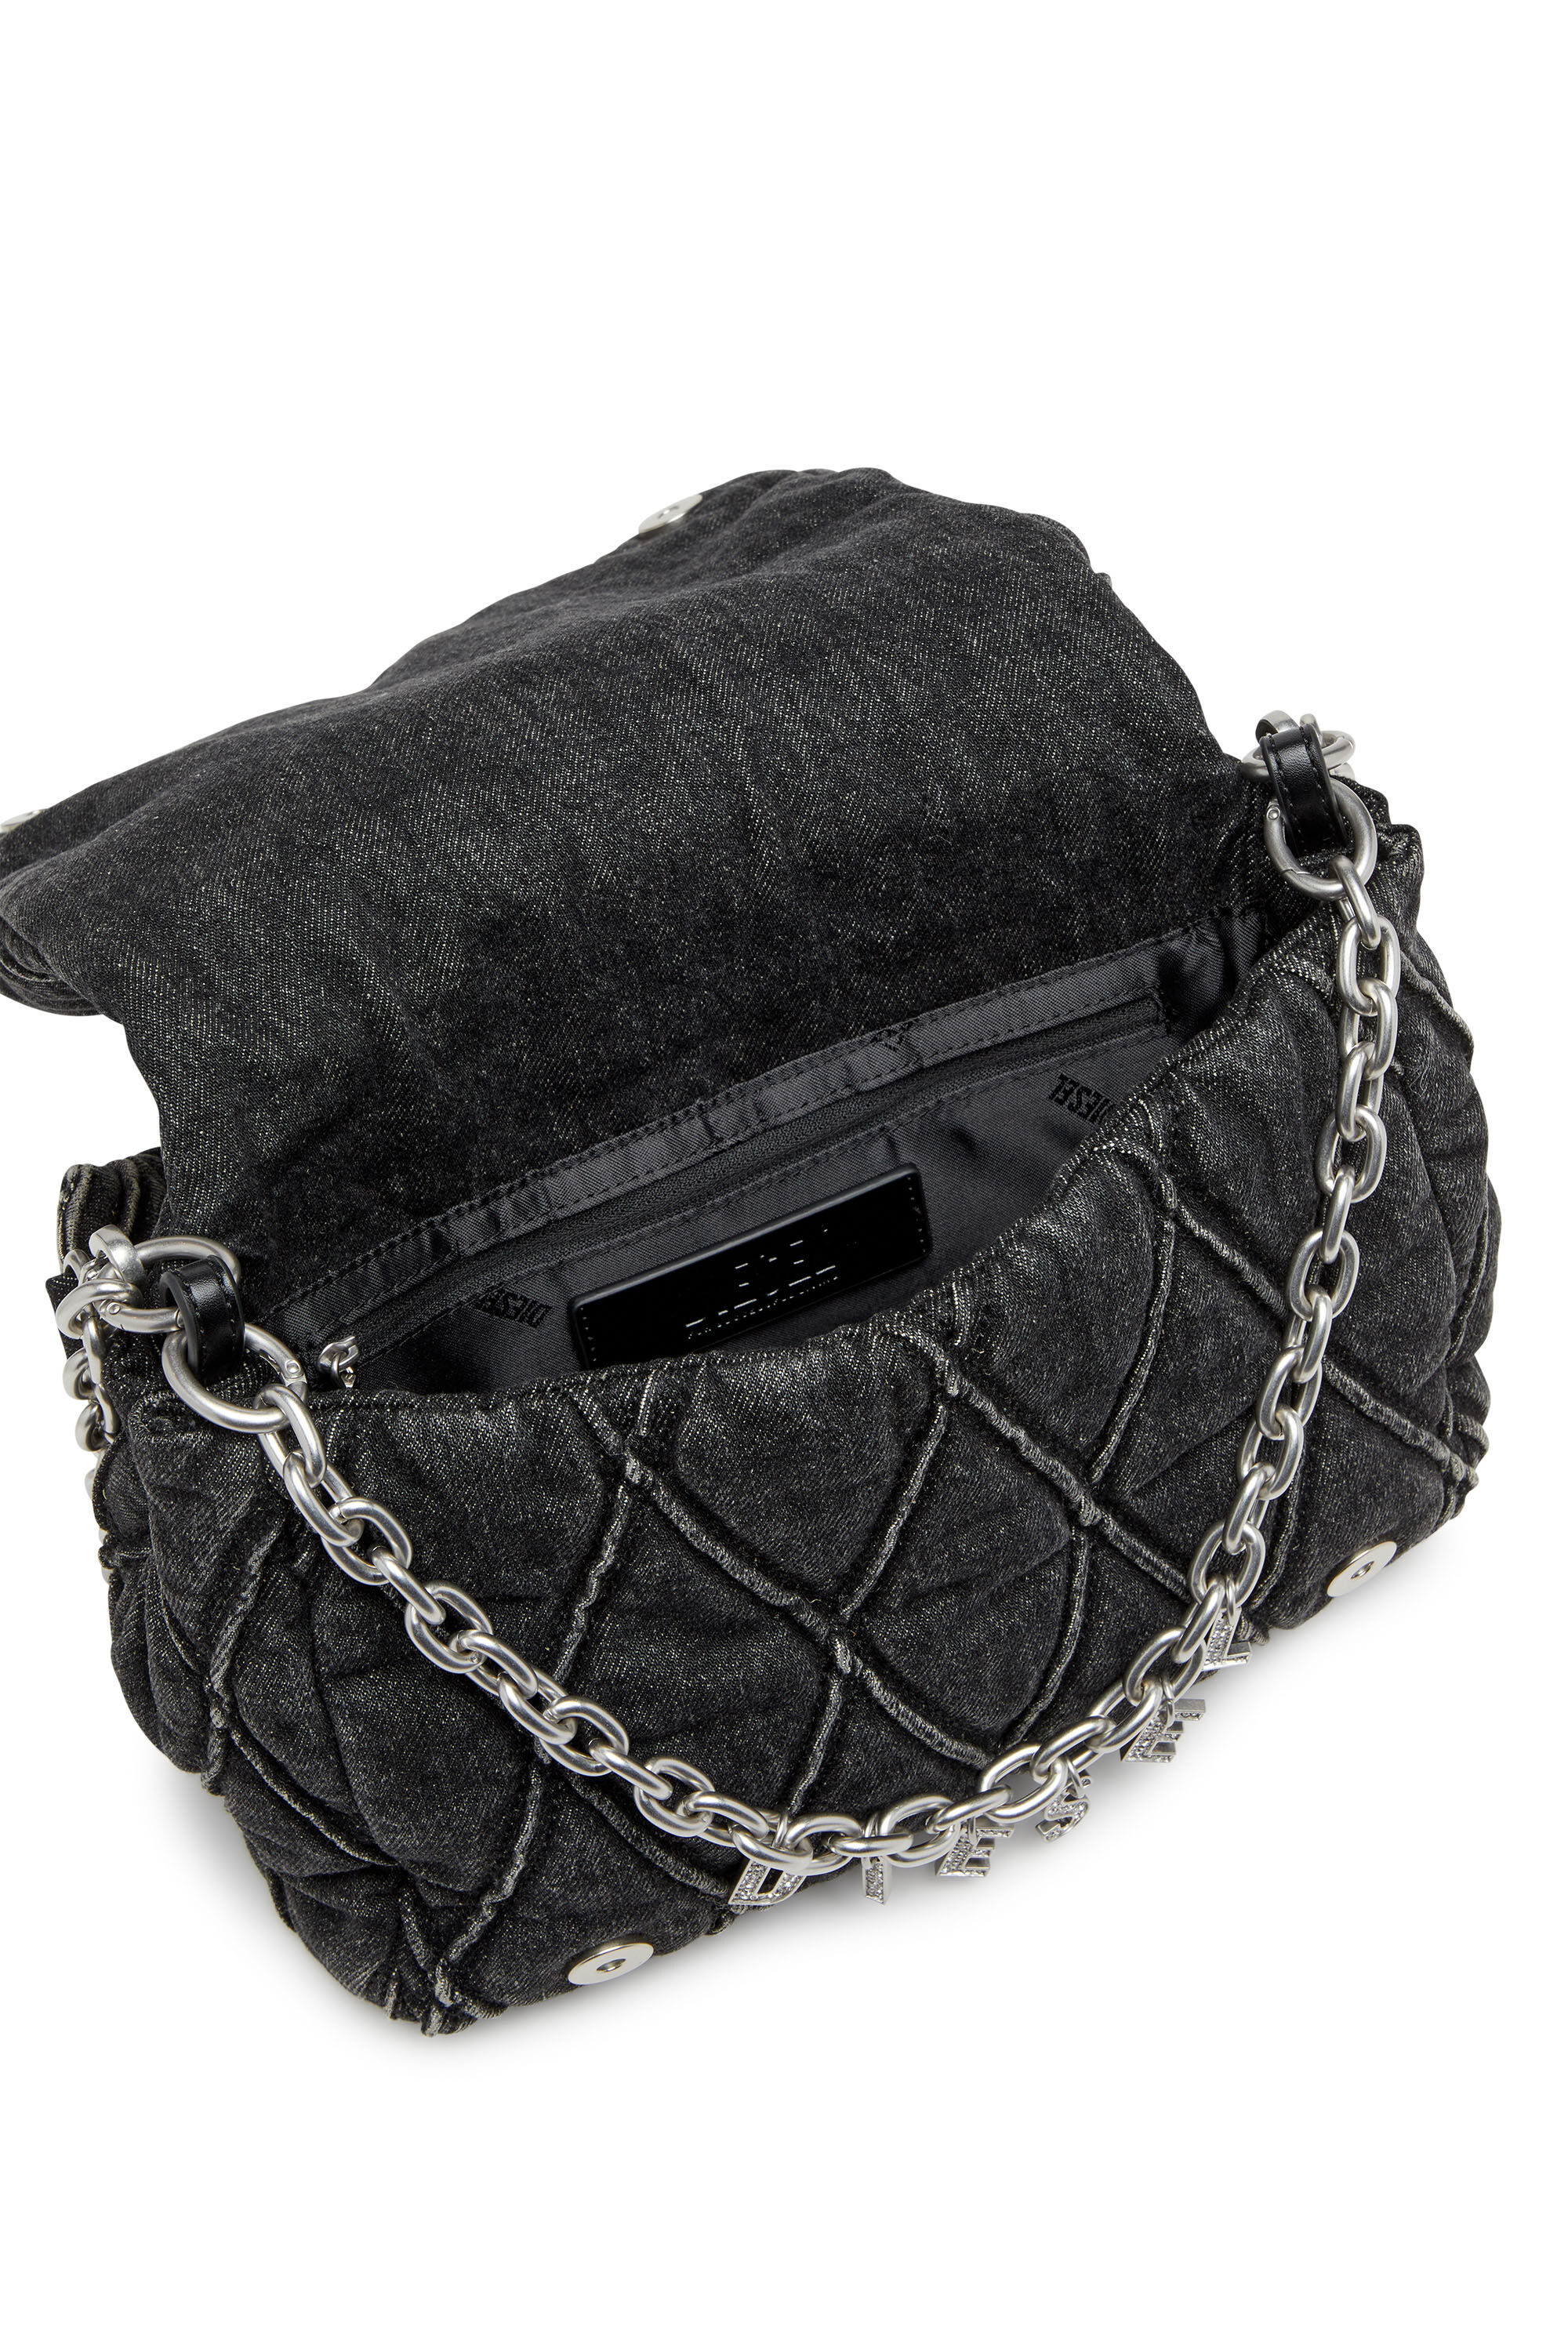 Chanel, Inc. Chanel 22 small handbag, Shiny calfskin & gold-tone